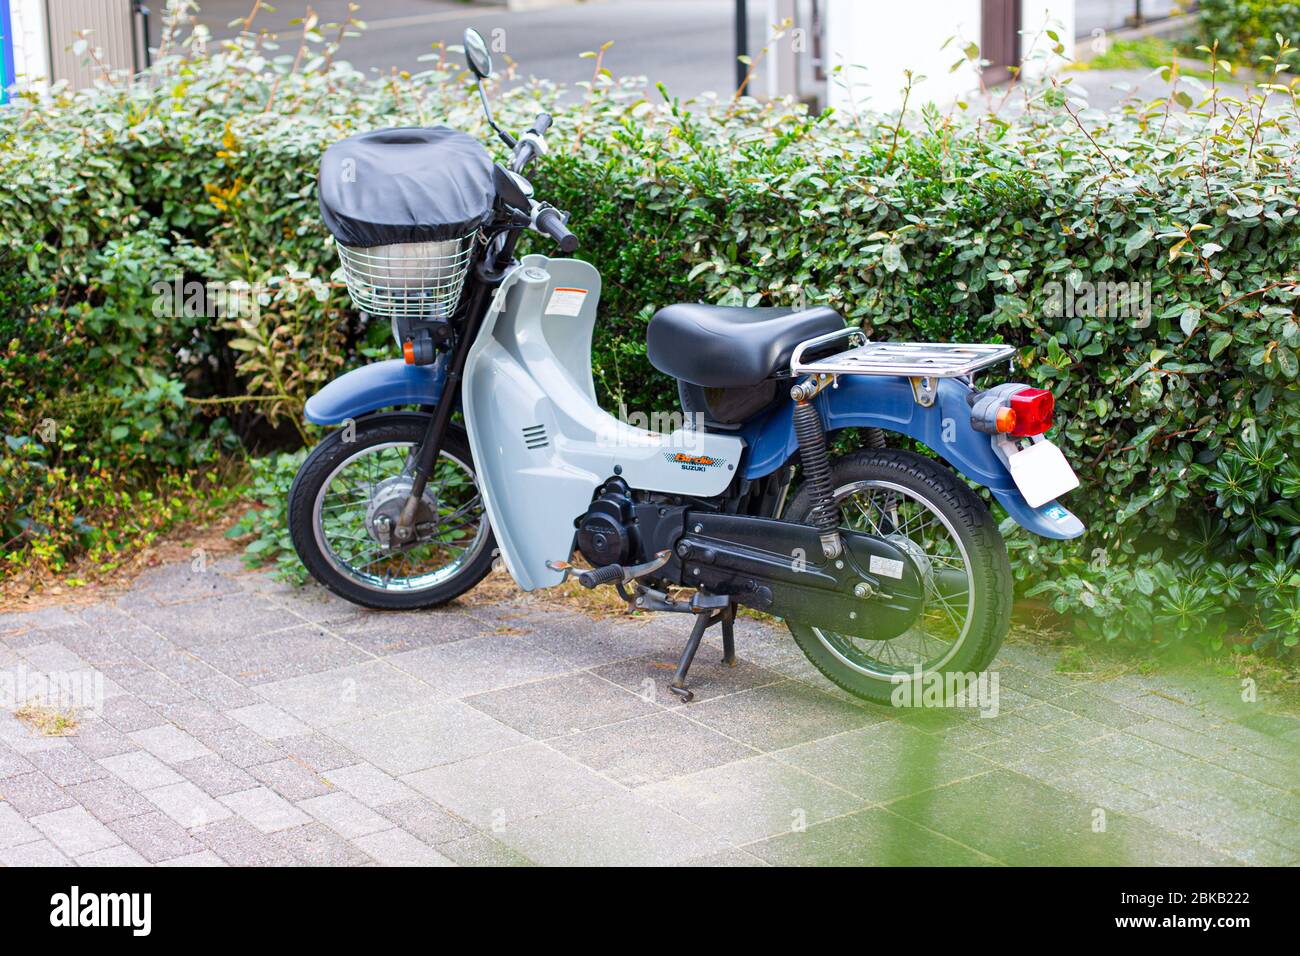 Suzuki Birdie popular Japanese vintage retro style motorcycle parking in the park outdoor.,12 November 2015 Kobe,Japan Stock Photo